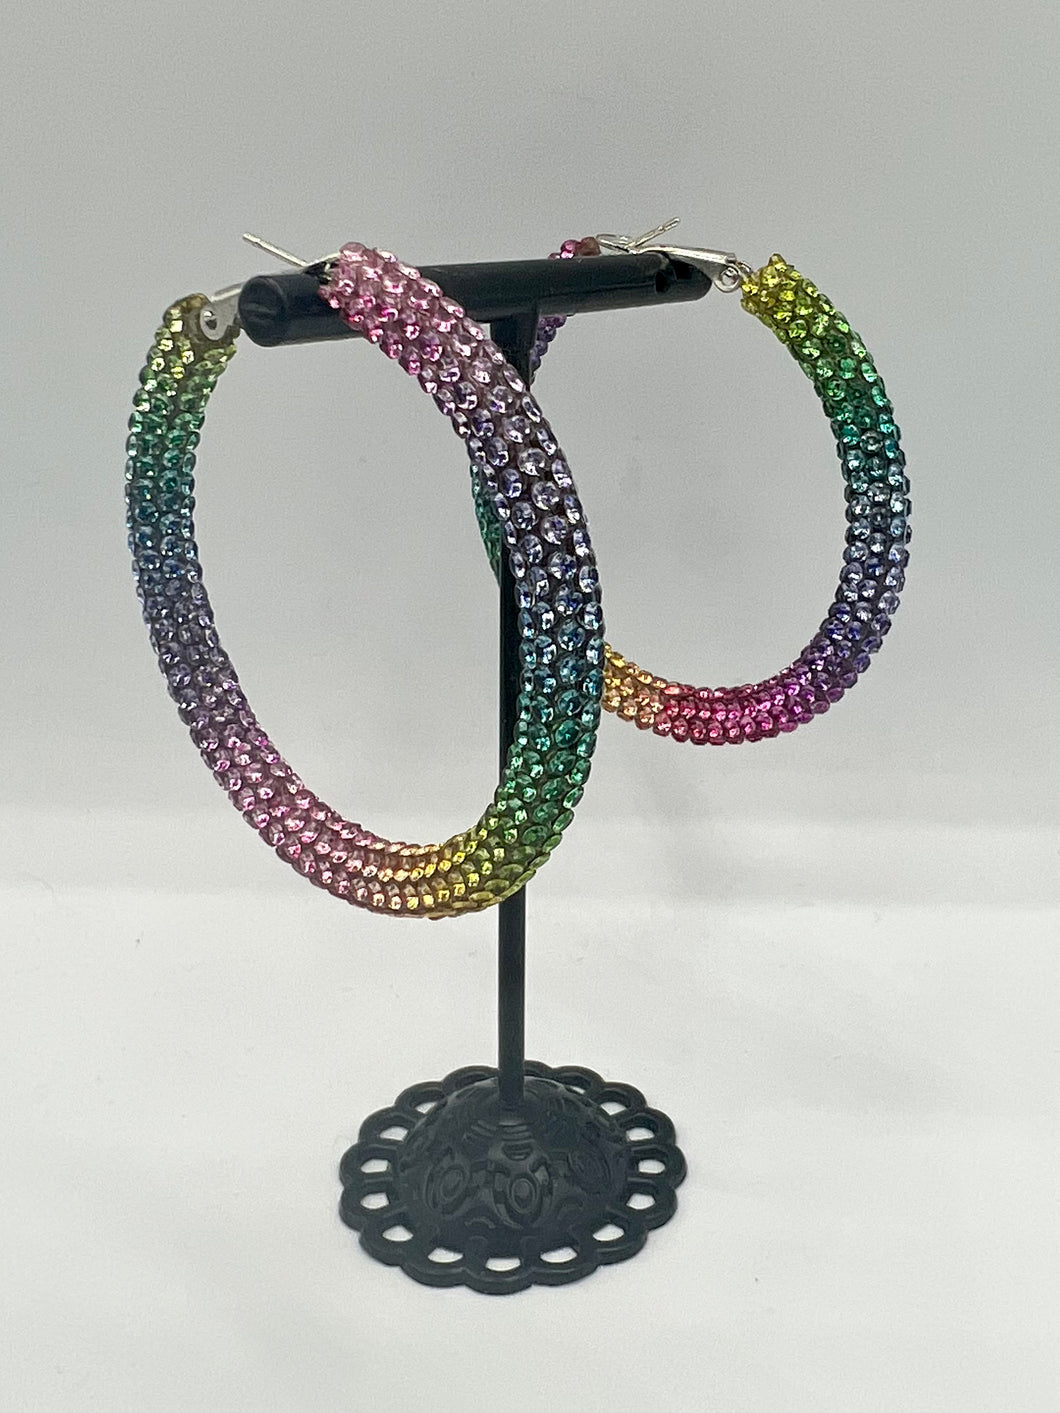 Tube Hoop Earrings 5cms - 2 Colours